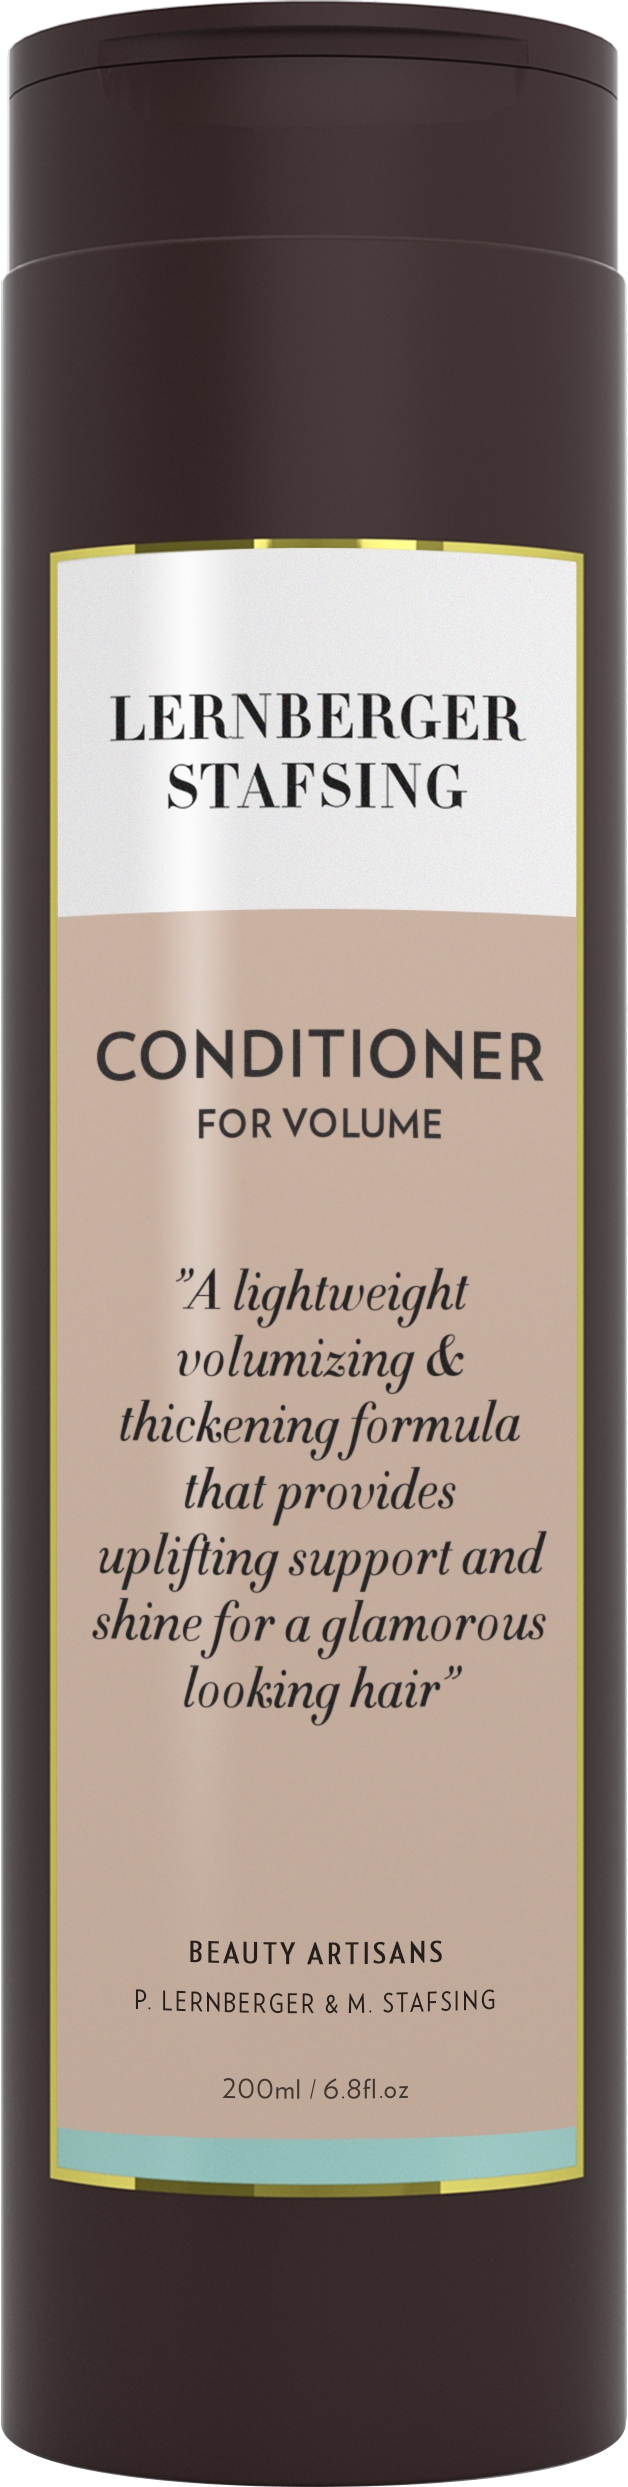  For Volume Conditioner